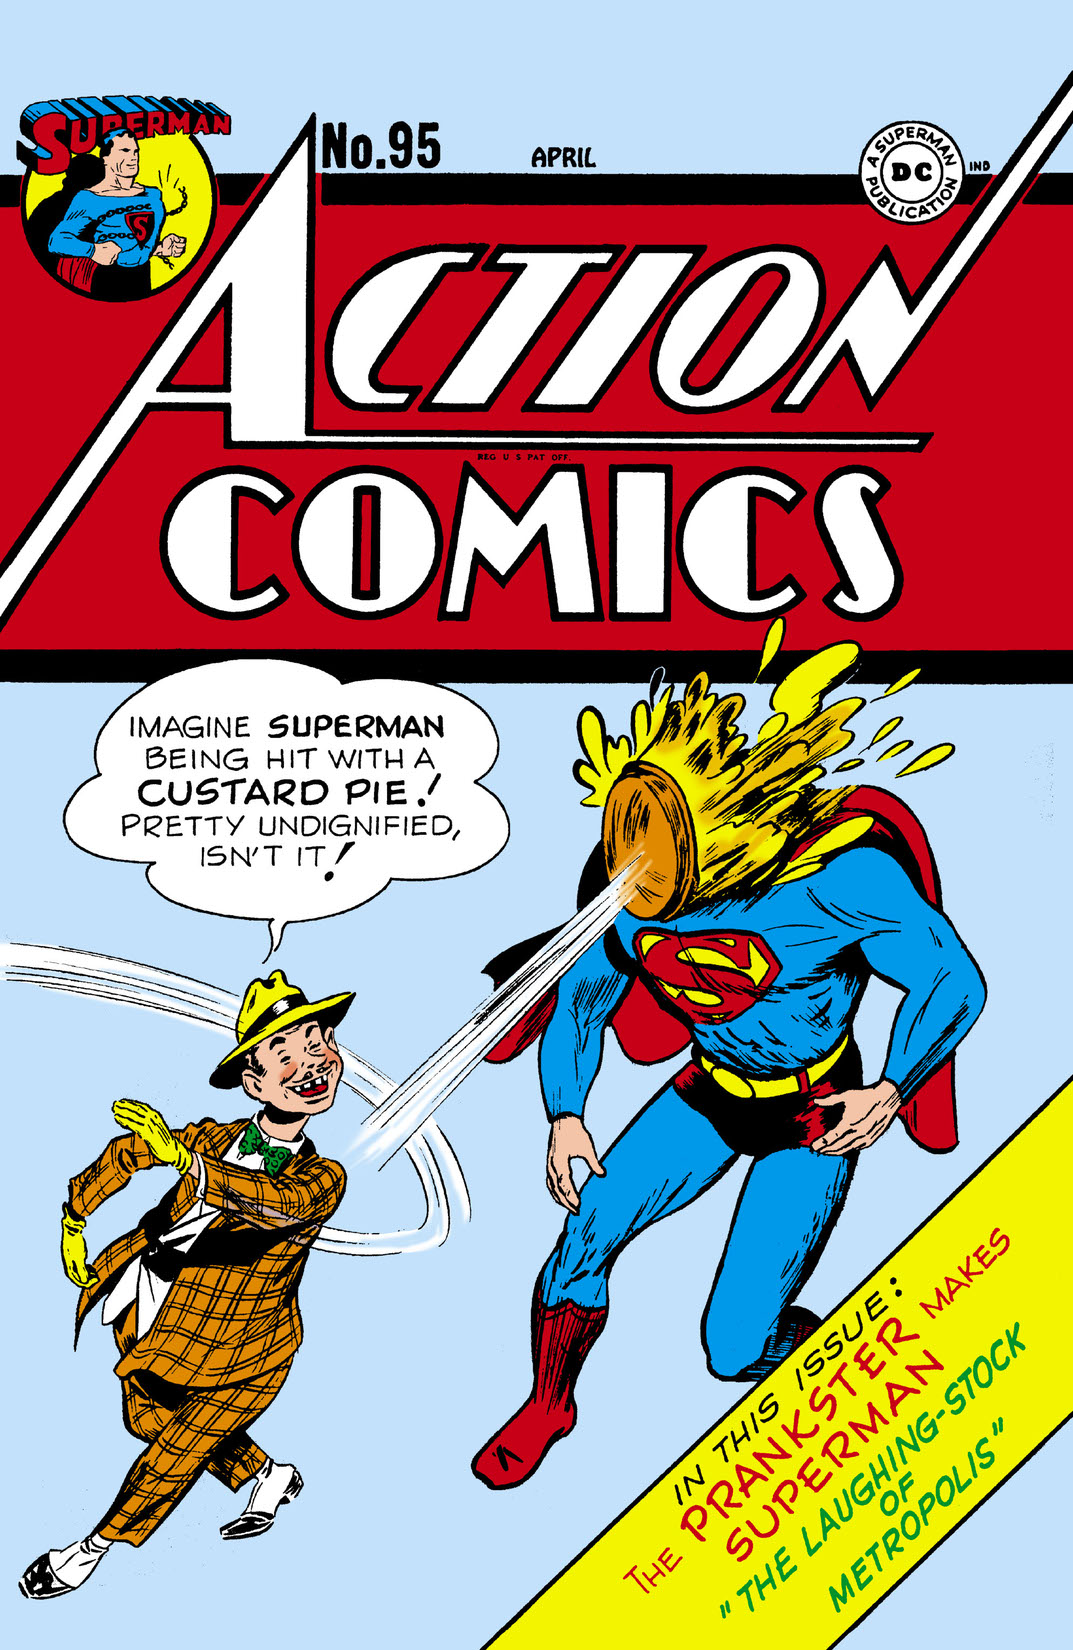 Action Comics (1938-) #95 preview images